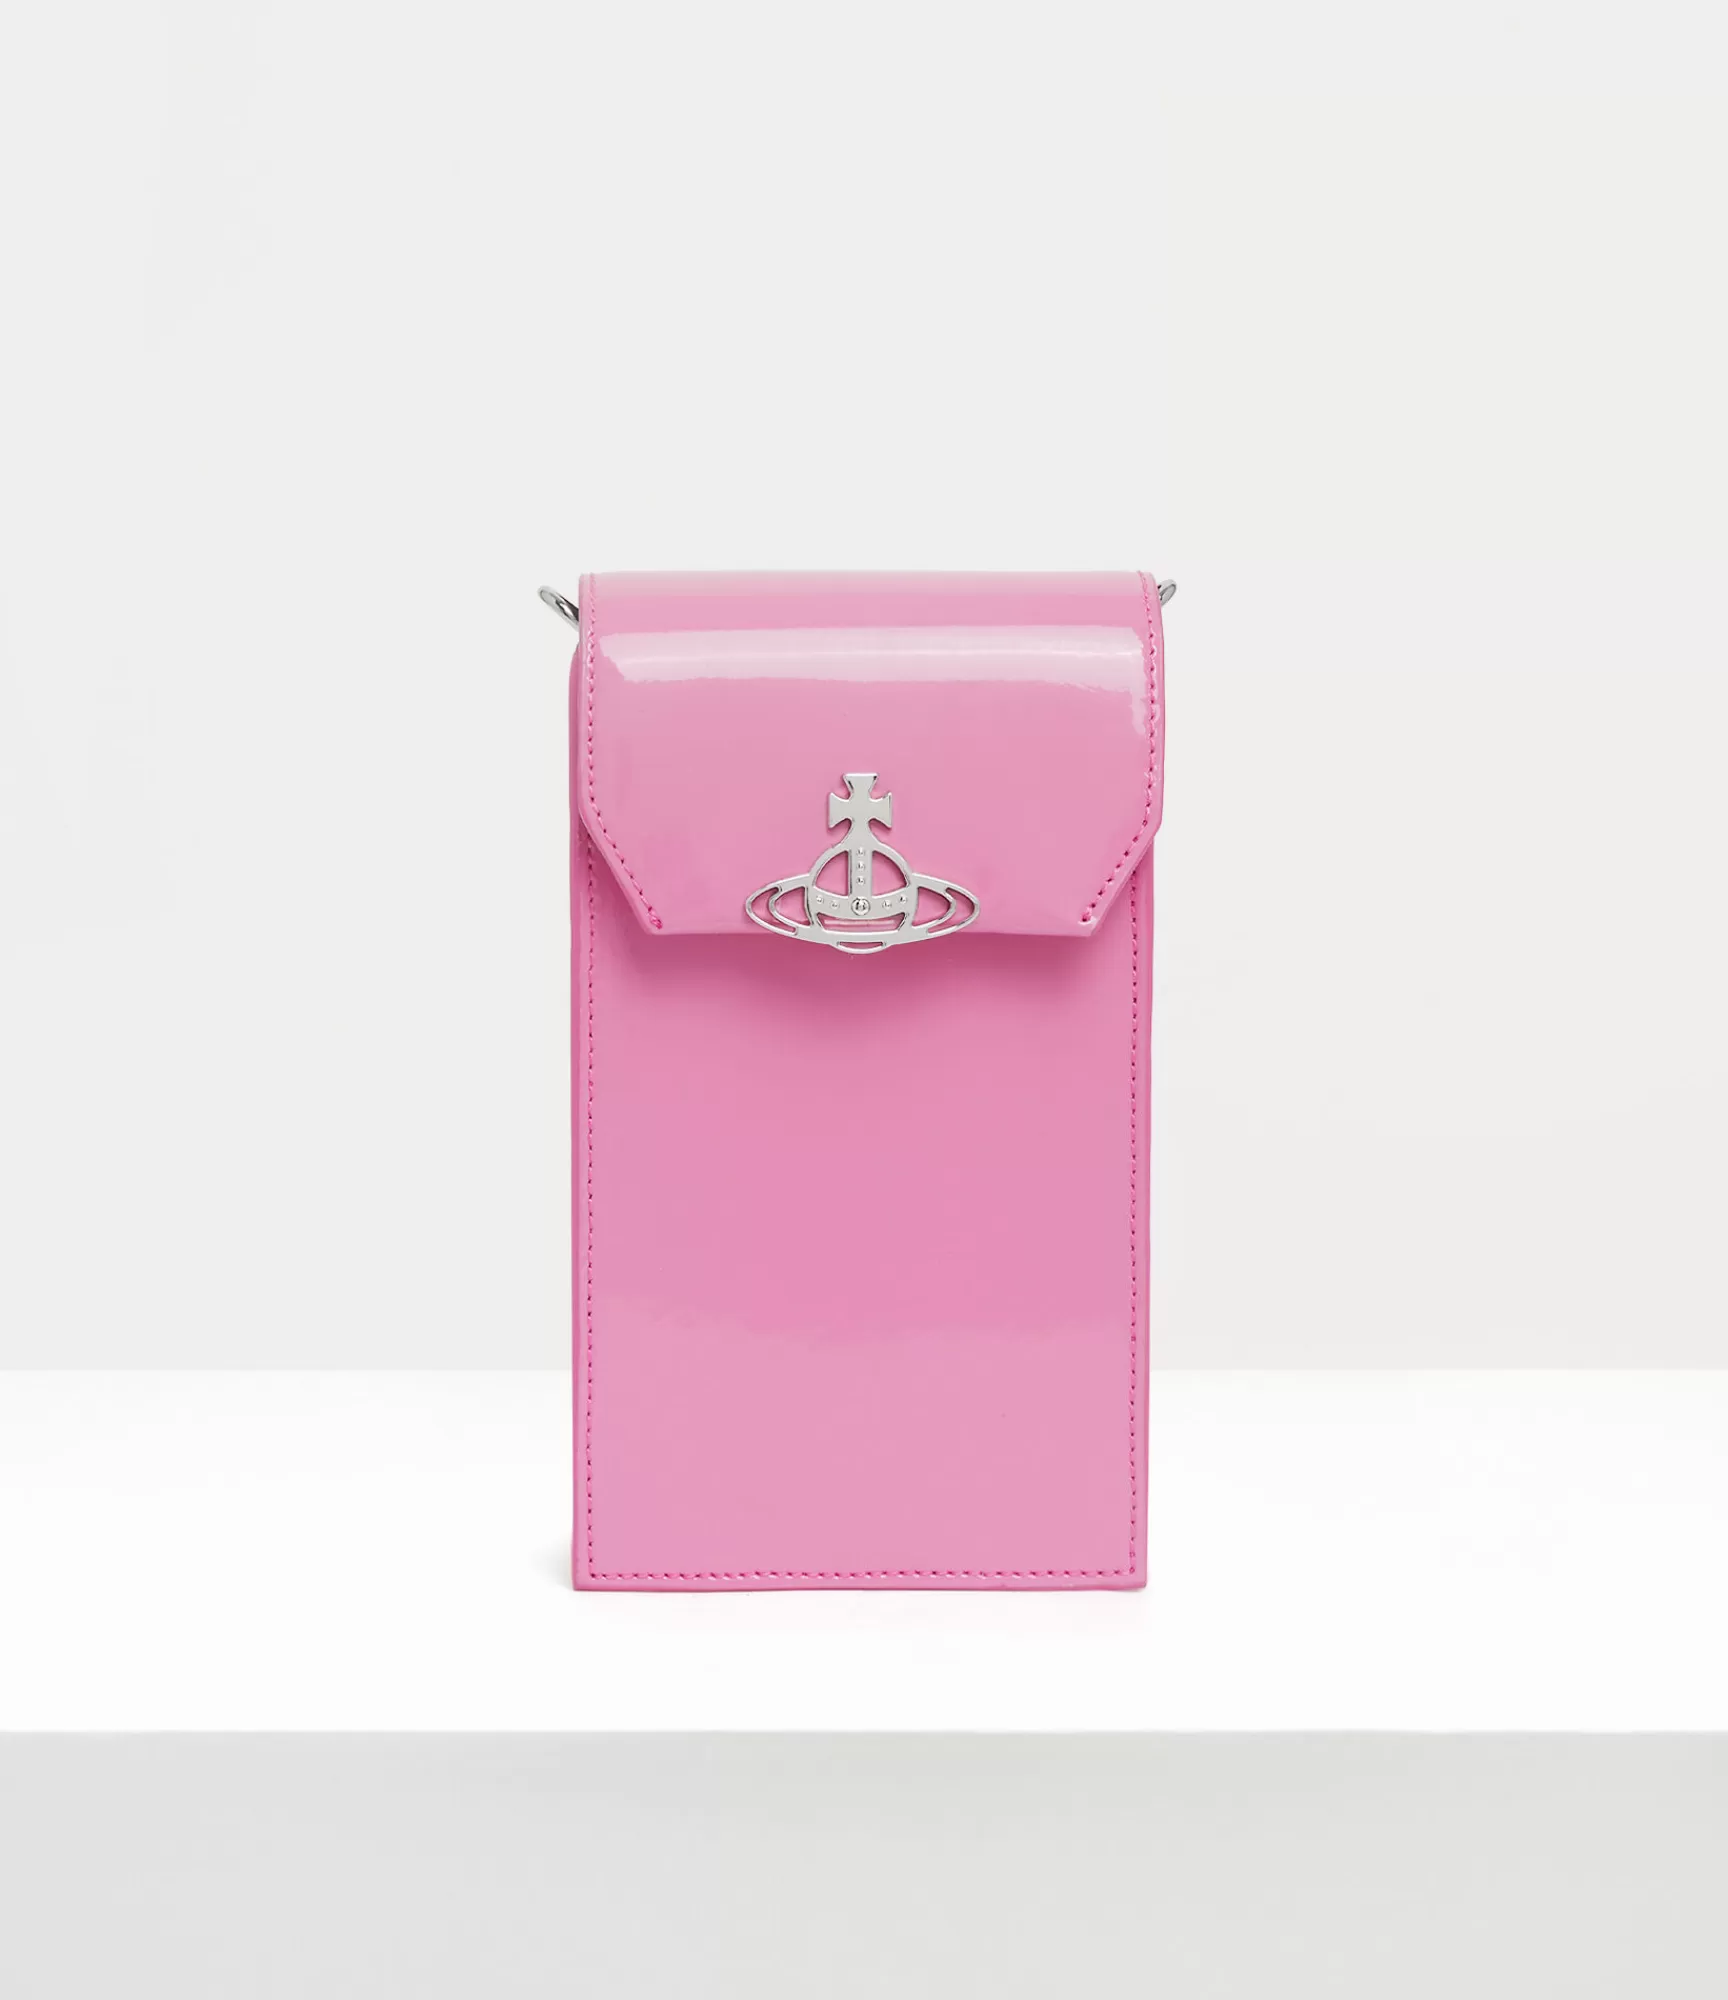 Vivienne Westwood Other Accessories*Phone bag Pink